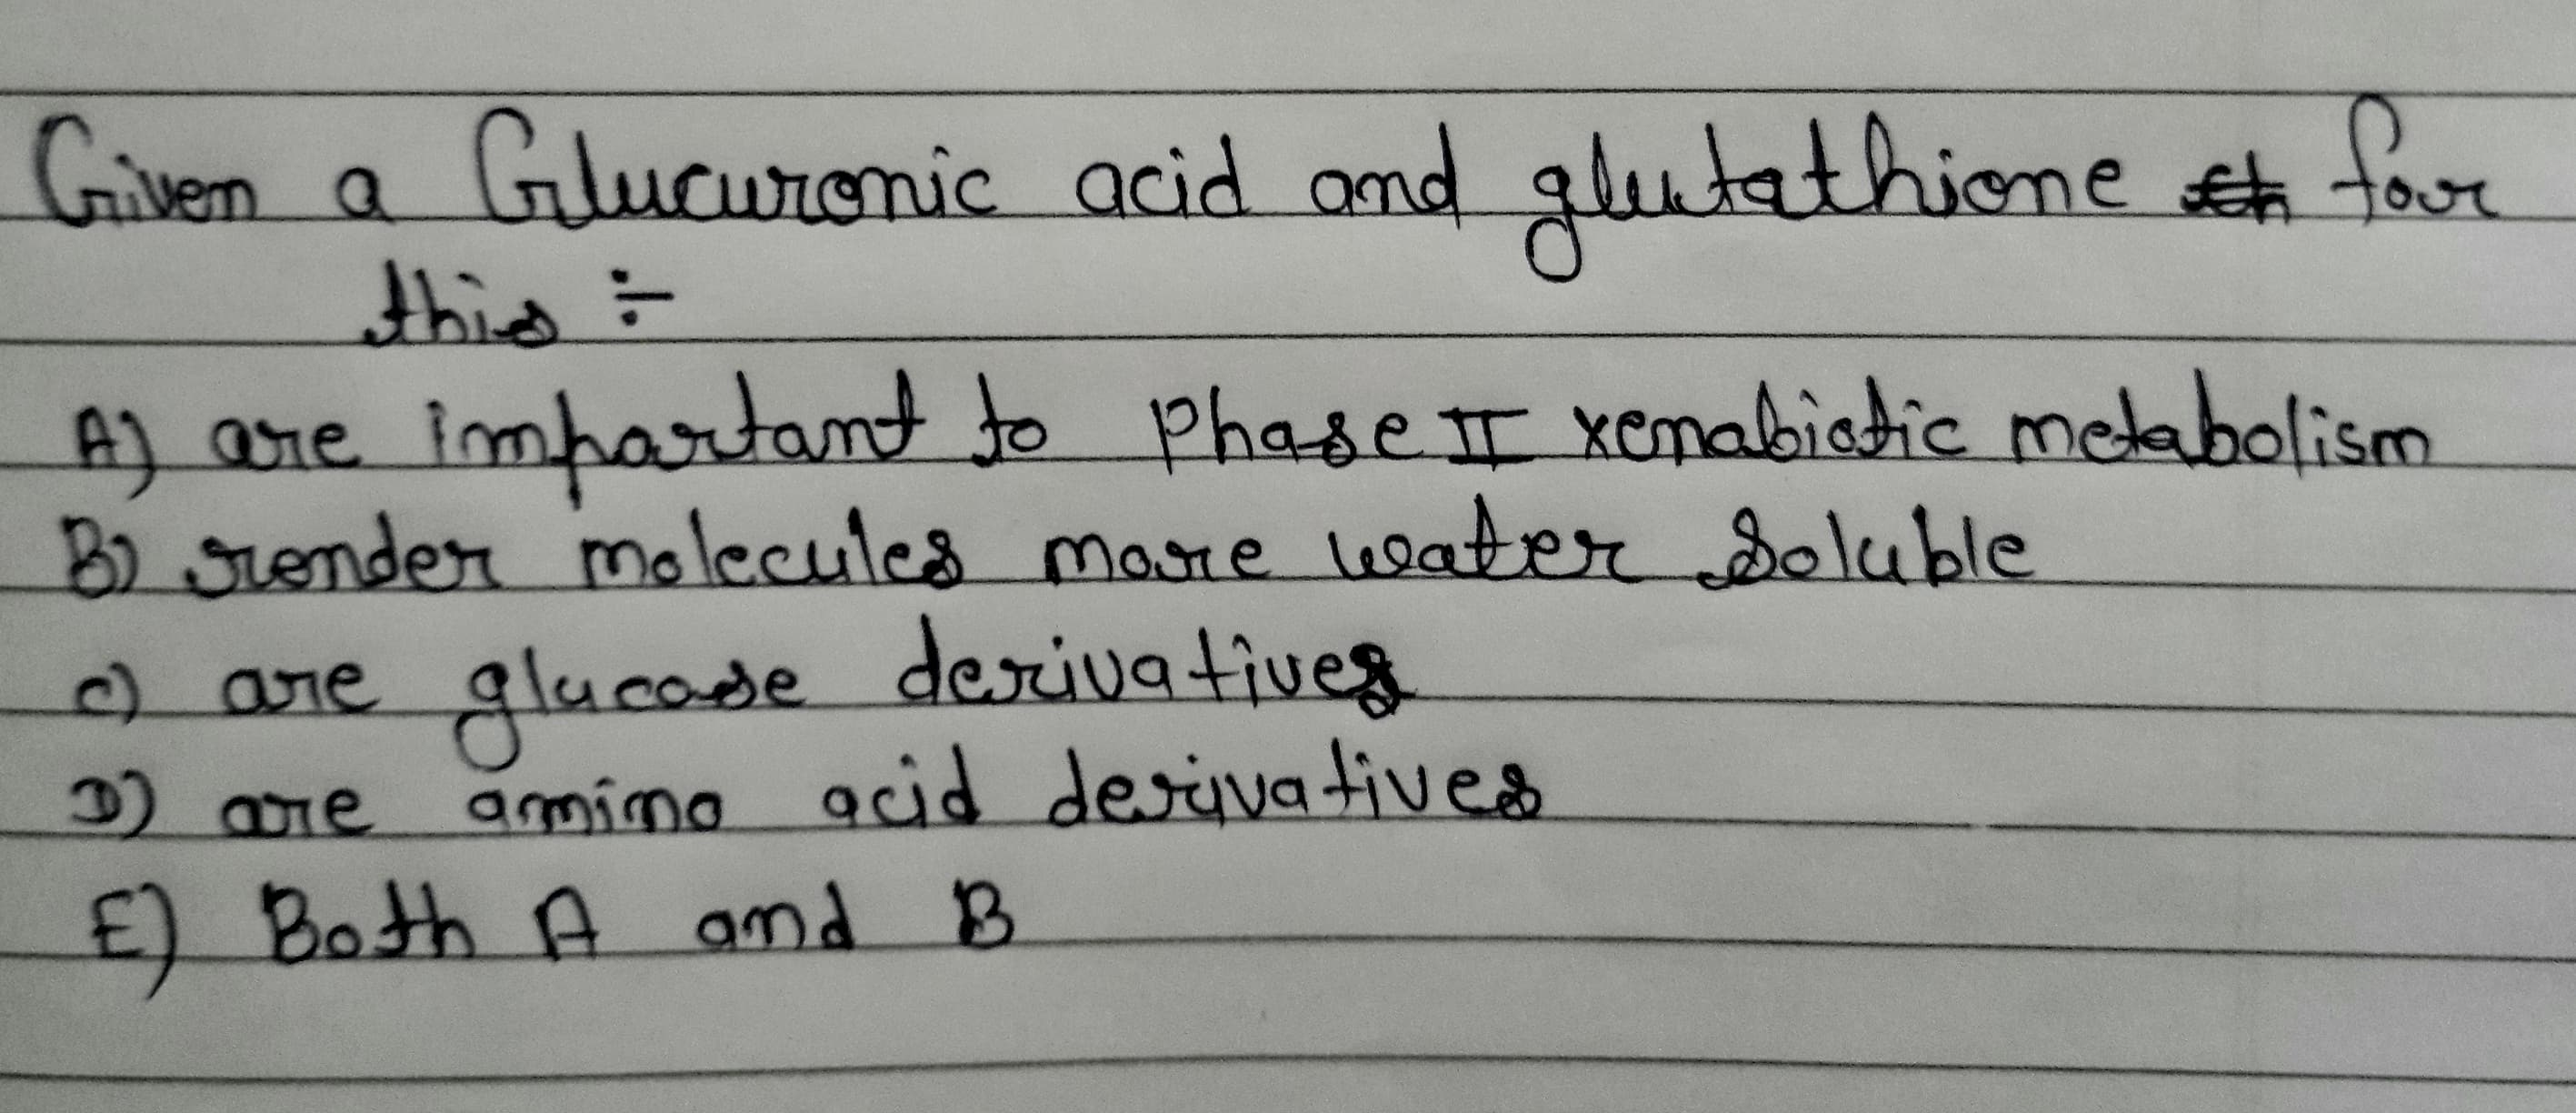 Griven a
Gilucuronic acid amd
glutathione e tor
r
: लपर
A] are impartantto
Phasett xenabiatic melabolism
B) sronder molecules more water deluble
desivatives
2 are glucode
2 0re amímo acid desivatives
E) Both A amd B
0are
